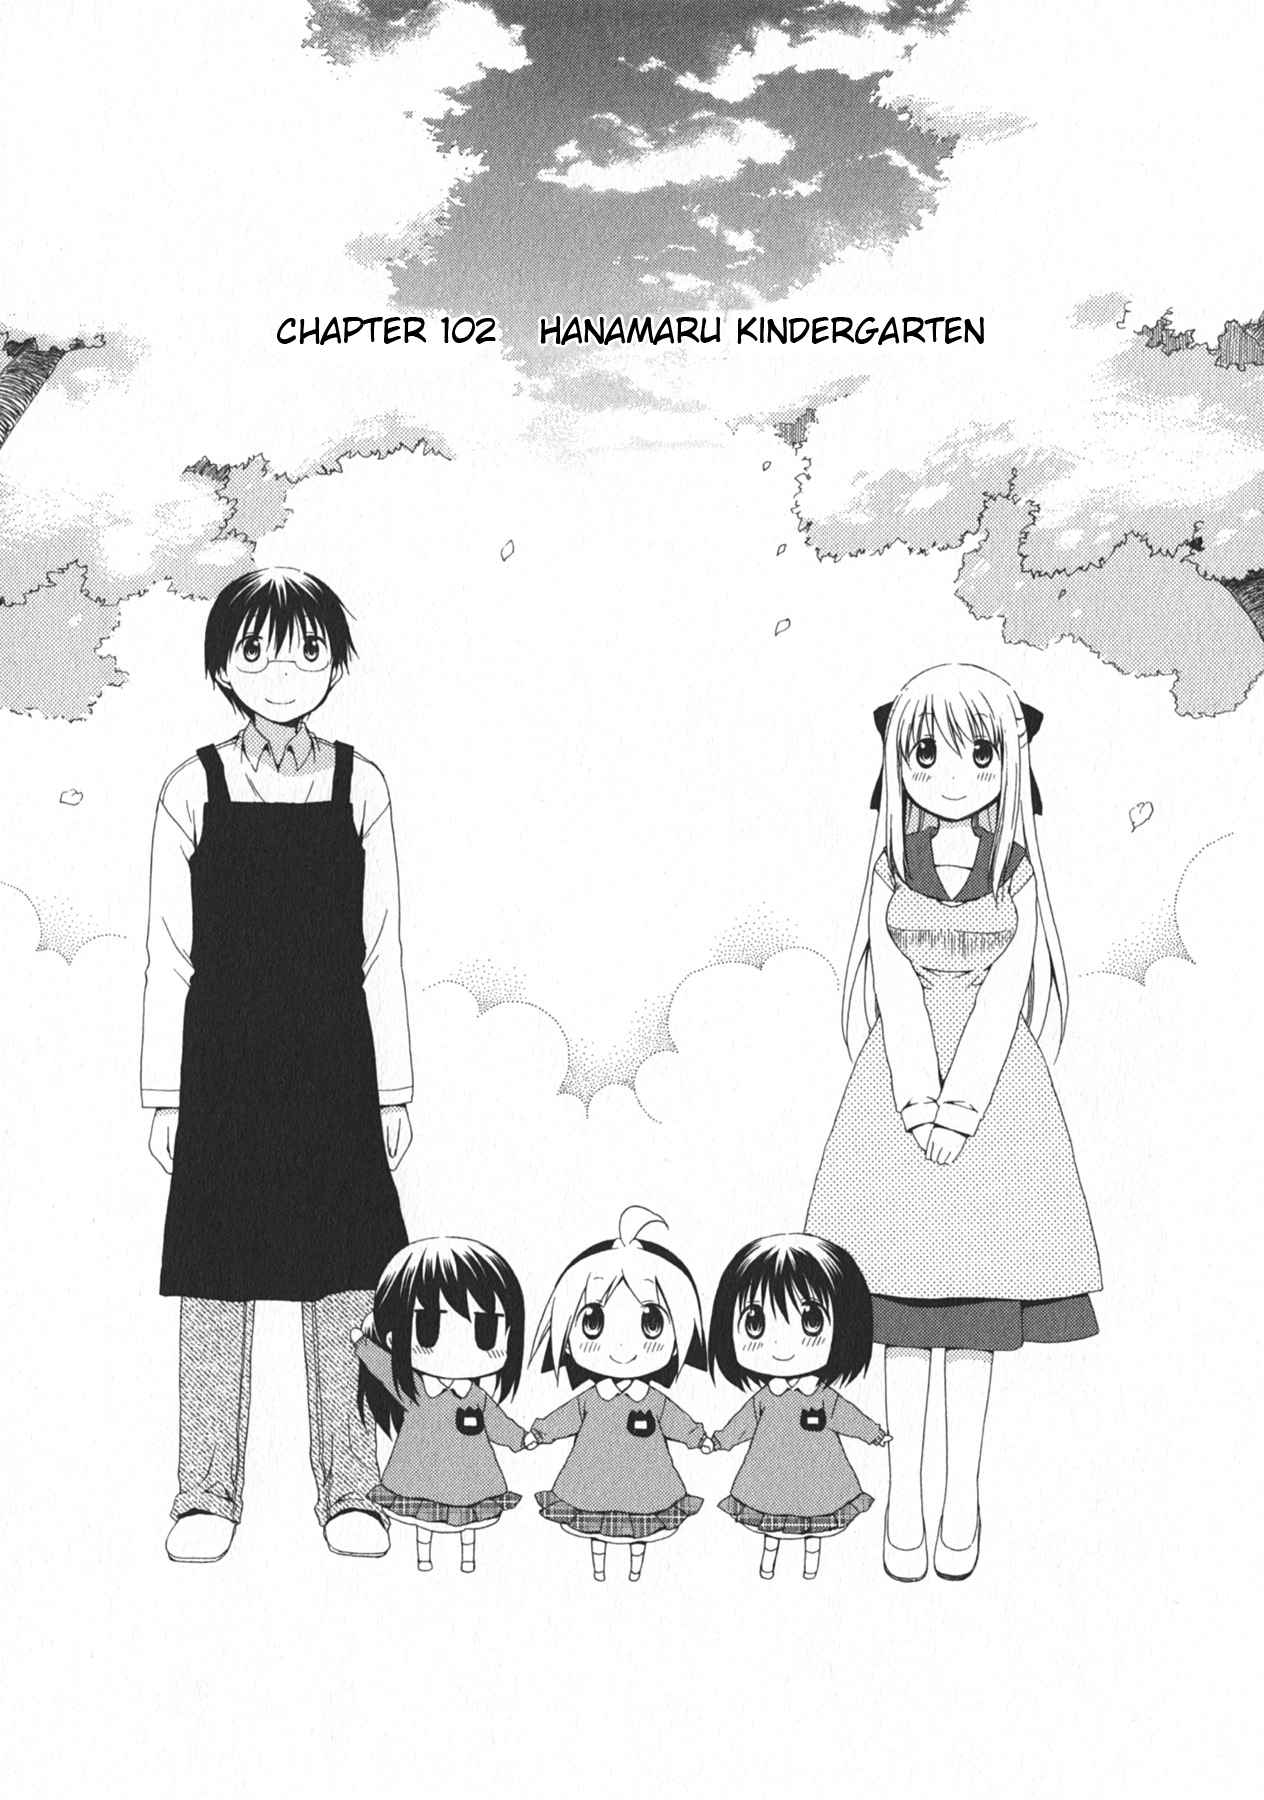 Hanamaru Kindergarten Vol. 11 Ch. 102 Hanamaru kindergarten